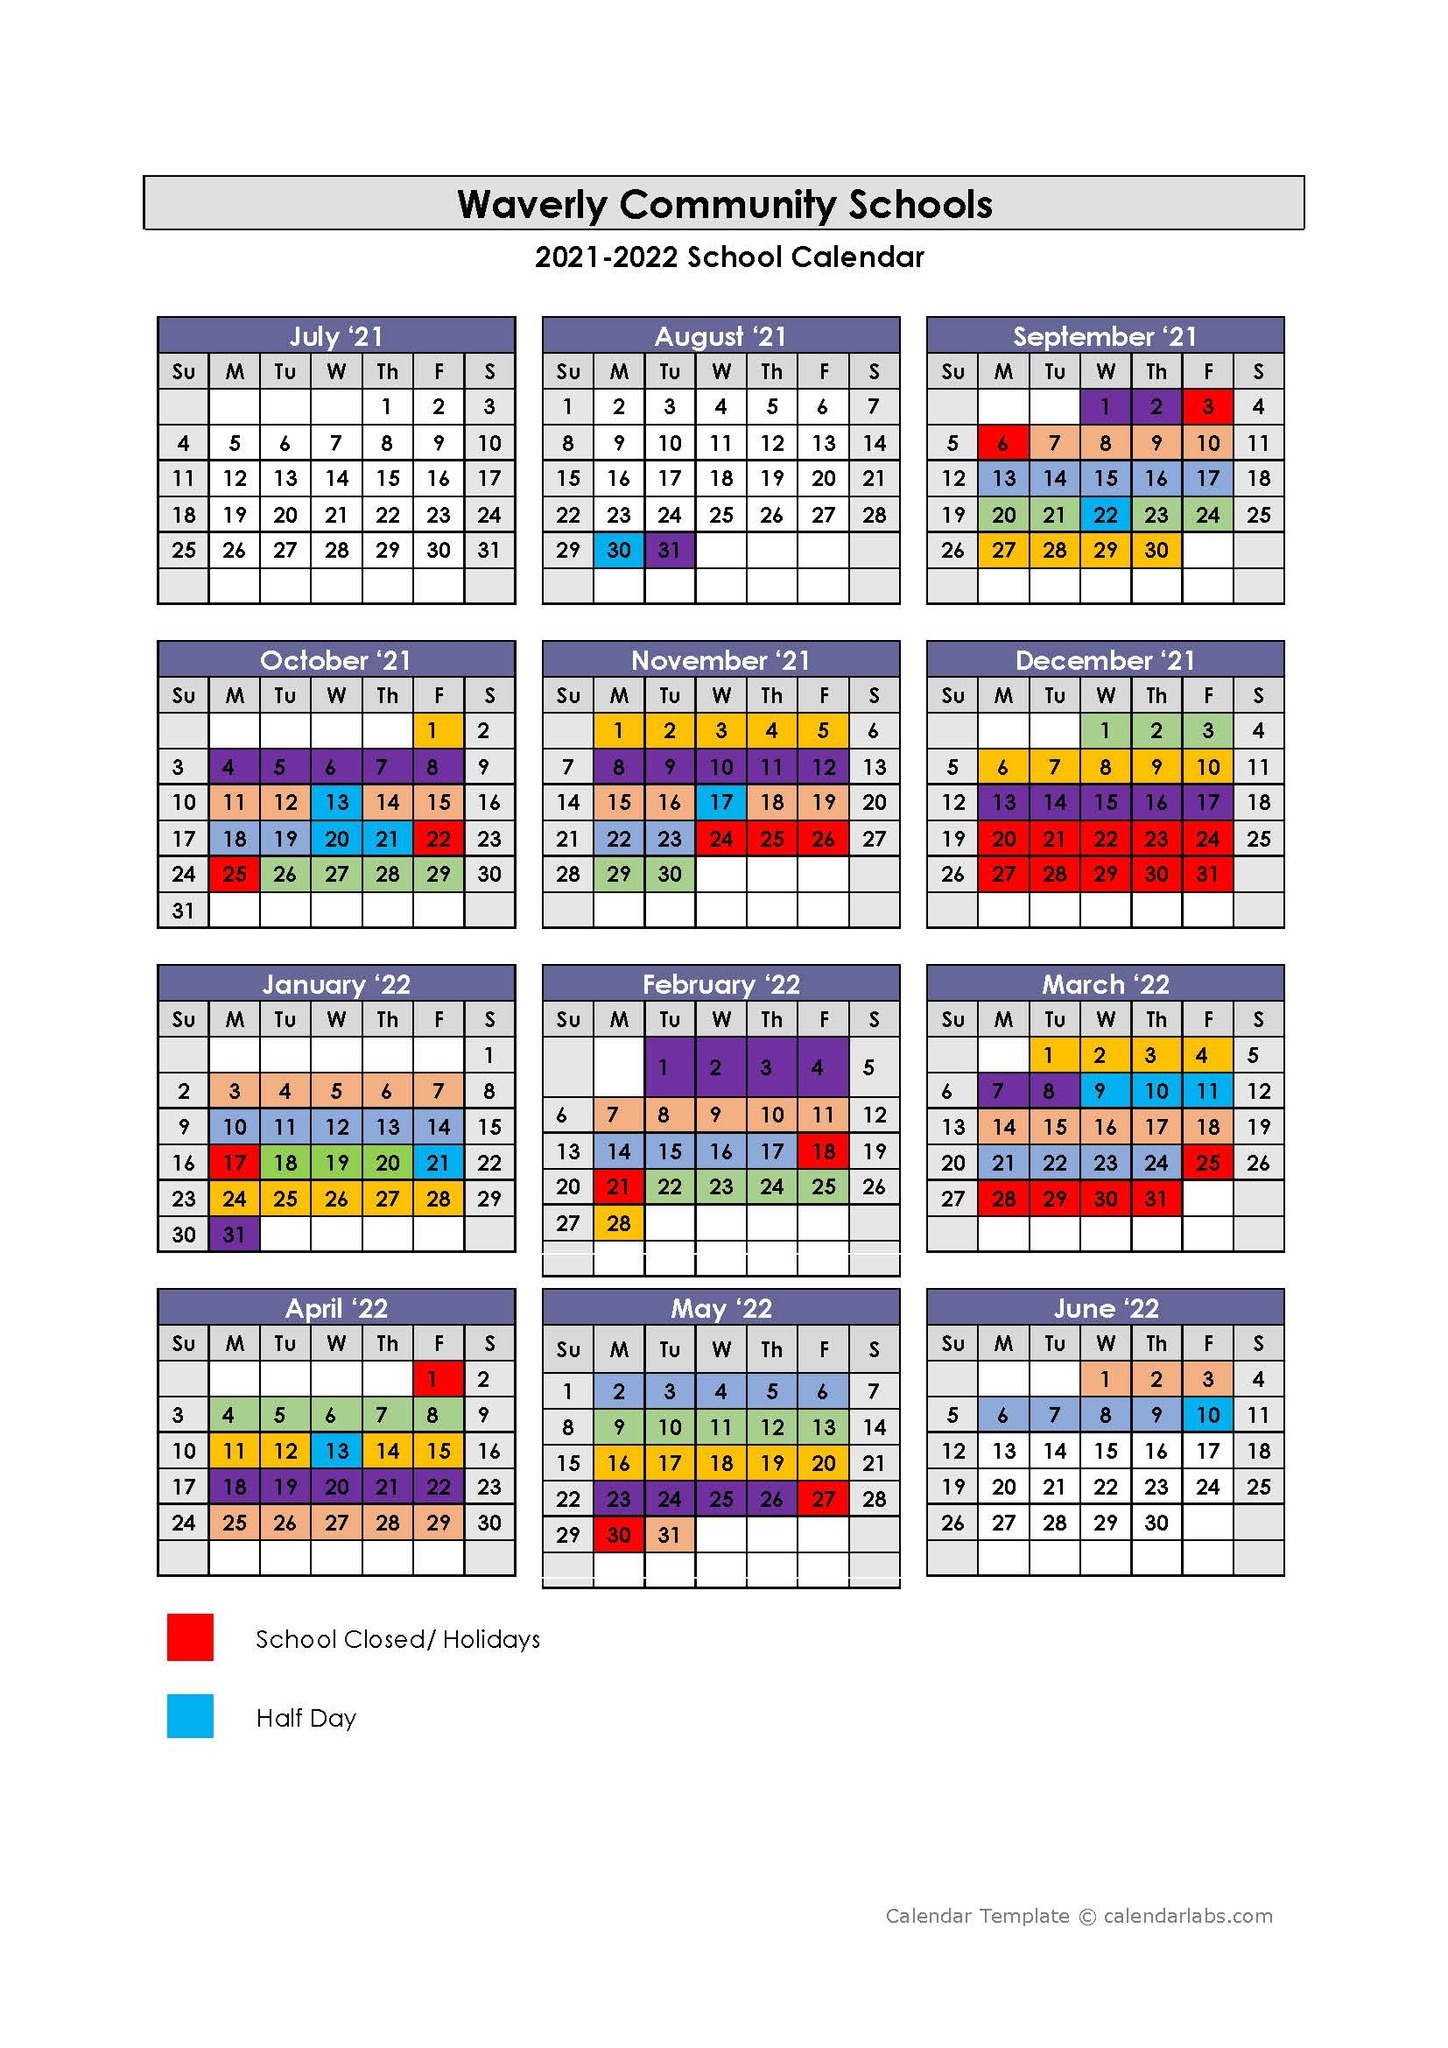 Waverly Academic calendar